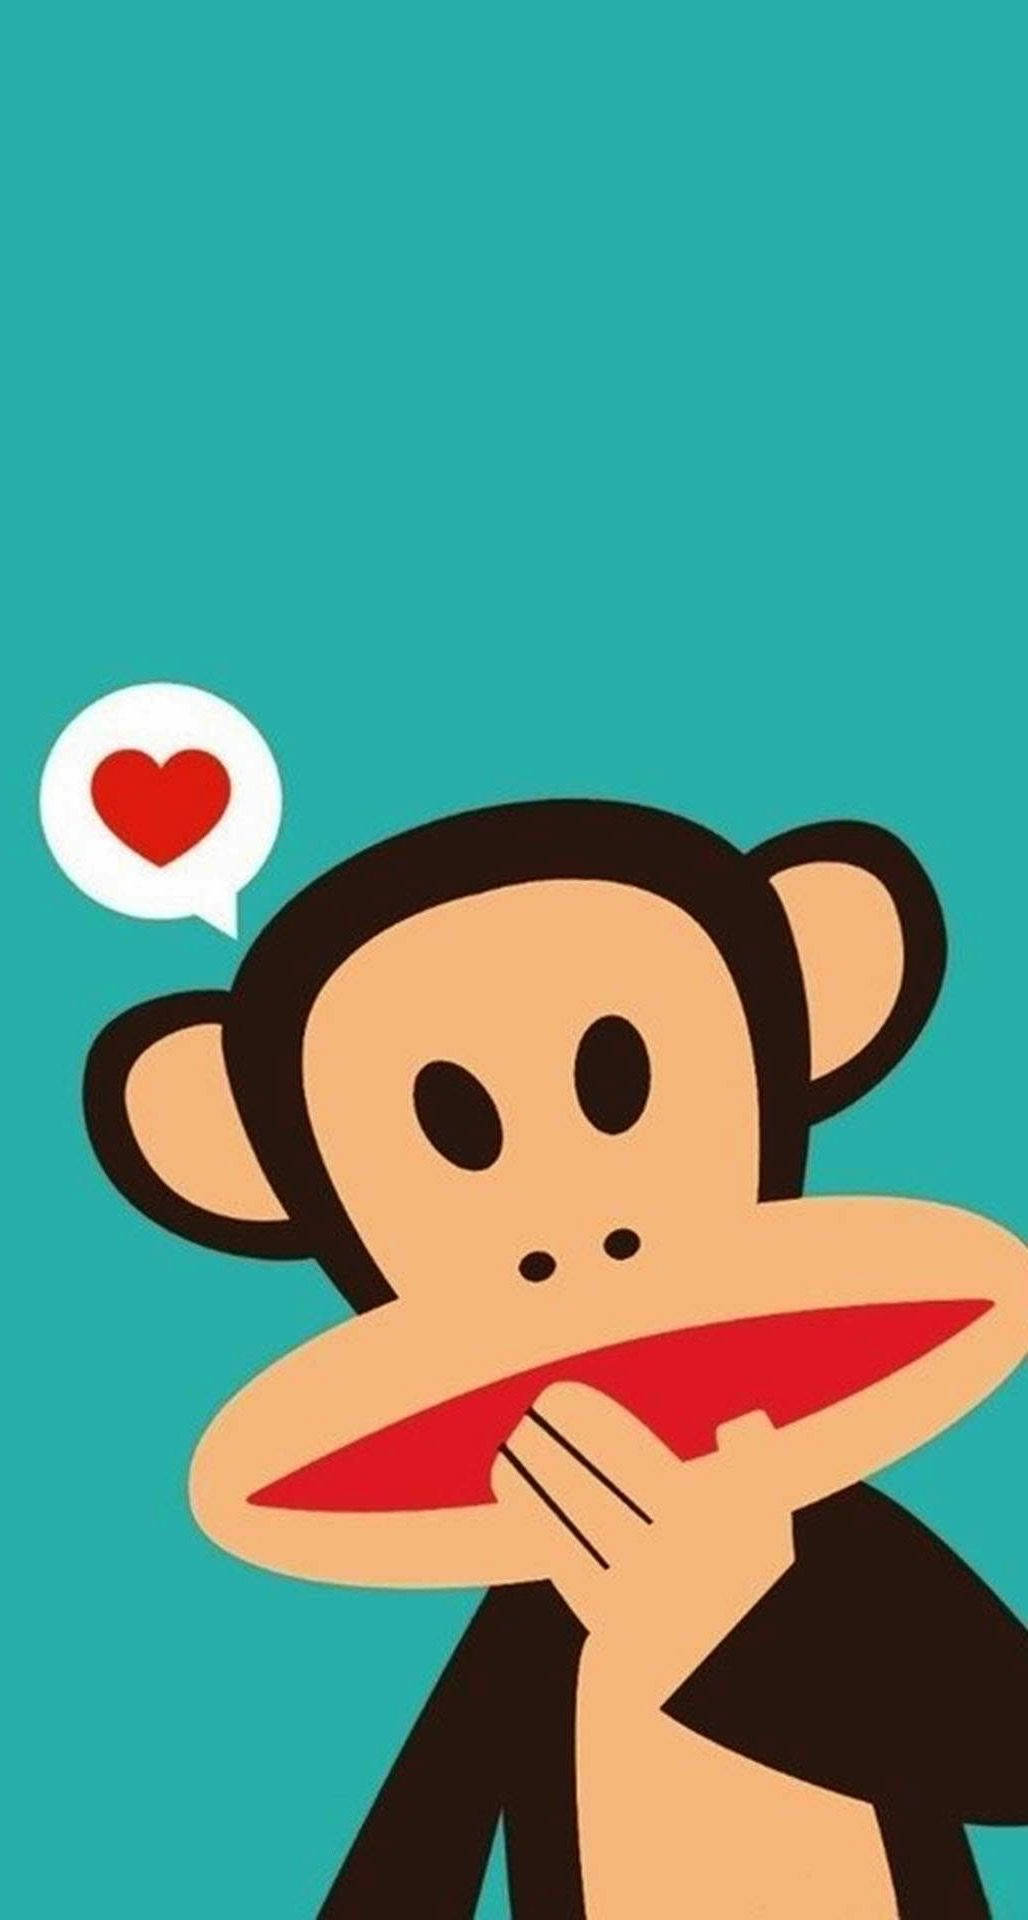 Cute Monkey Vector Art Background